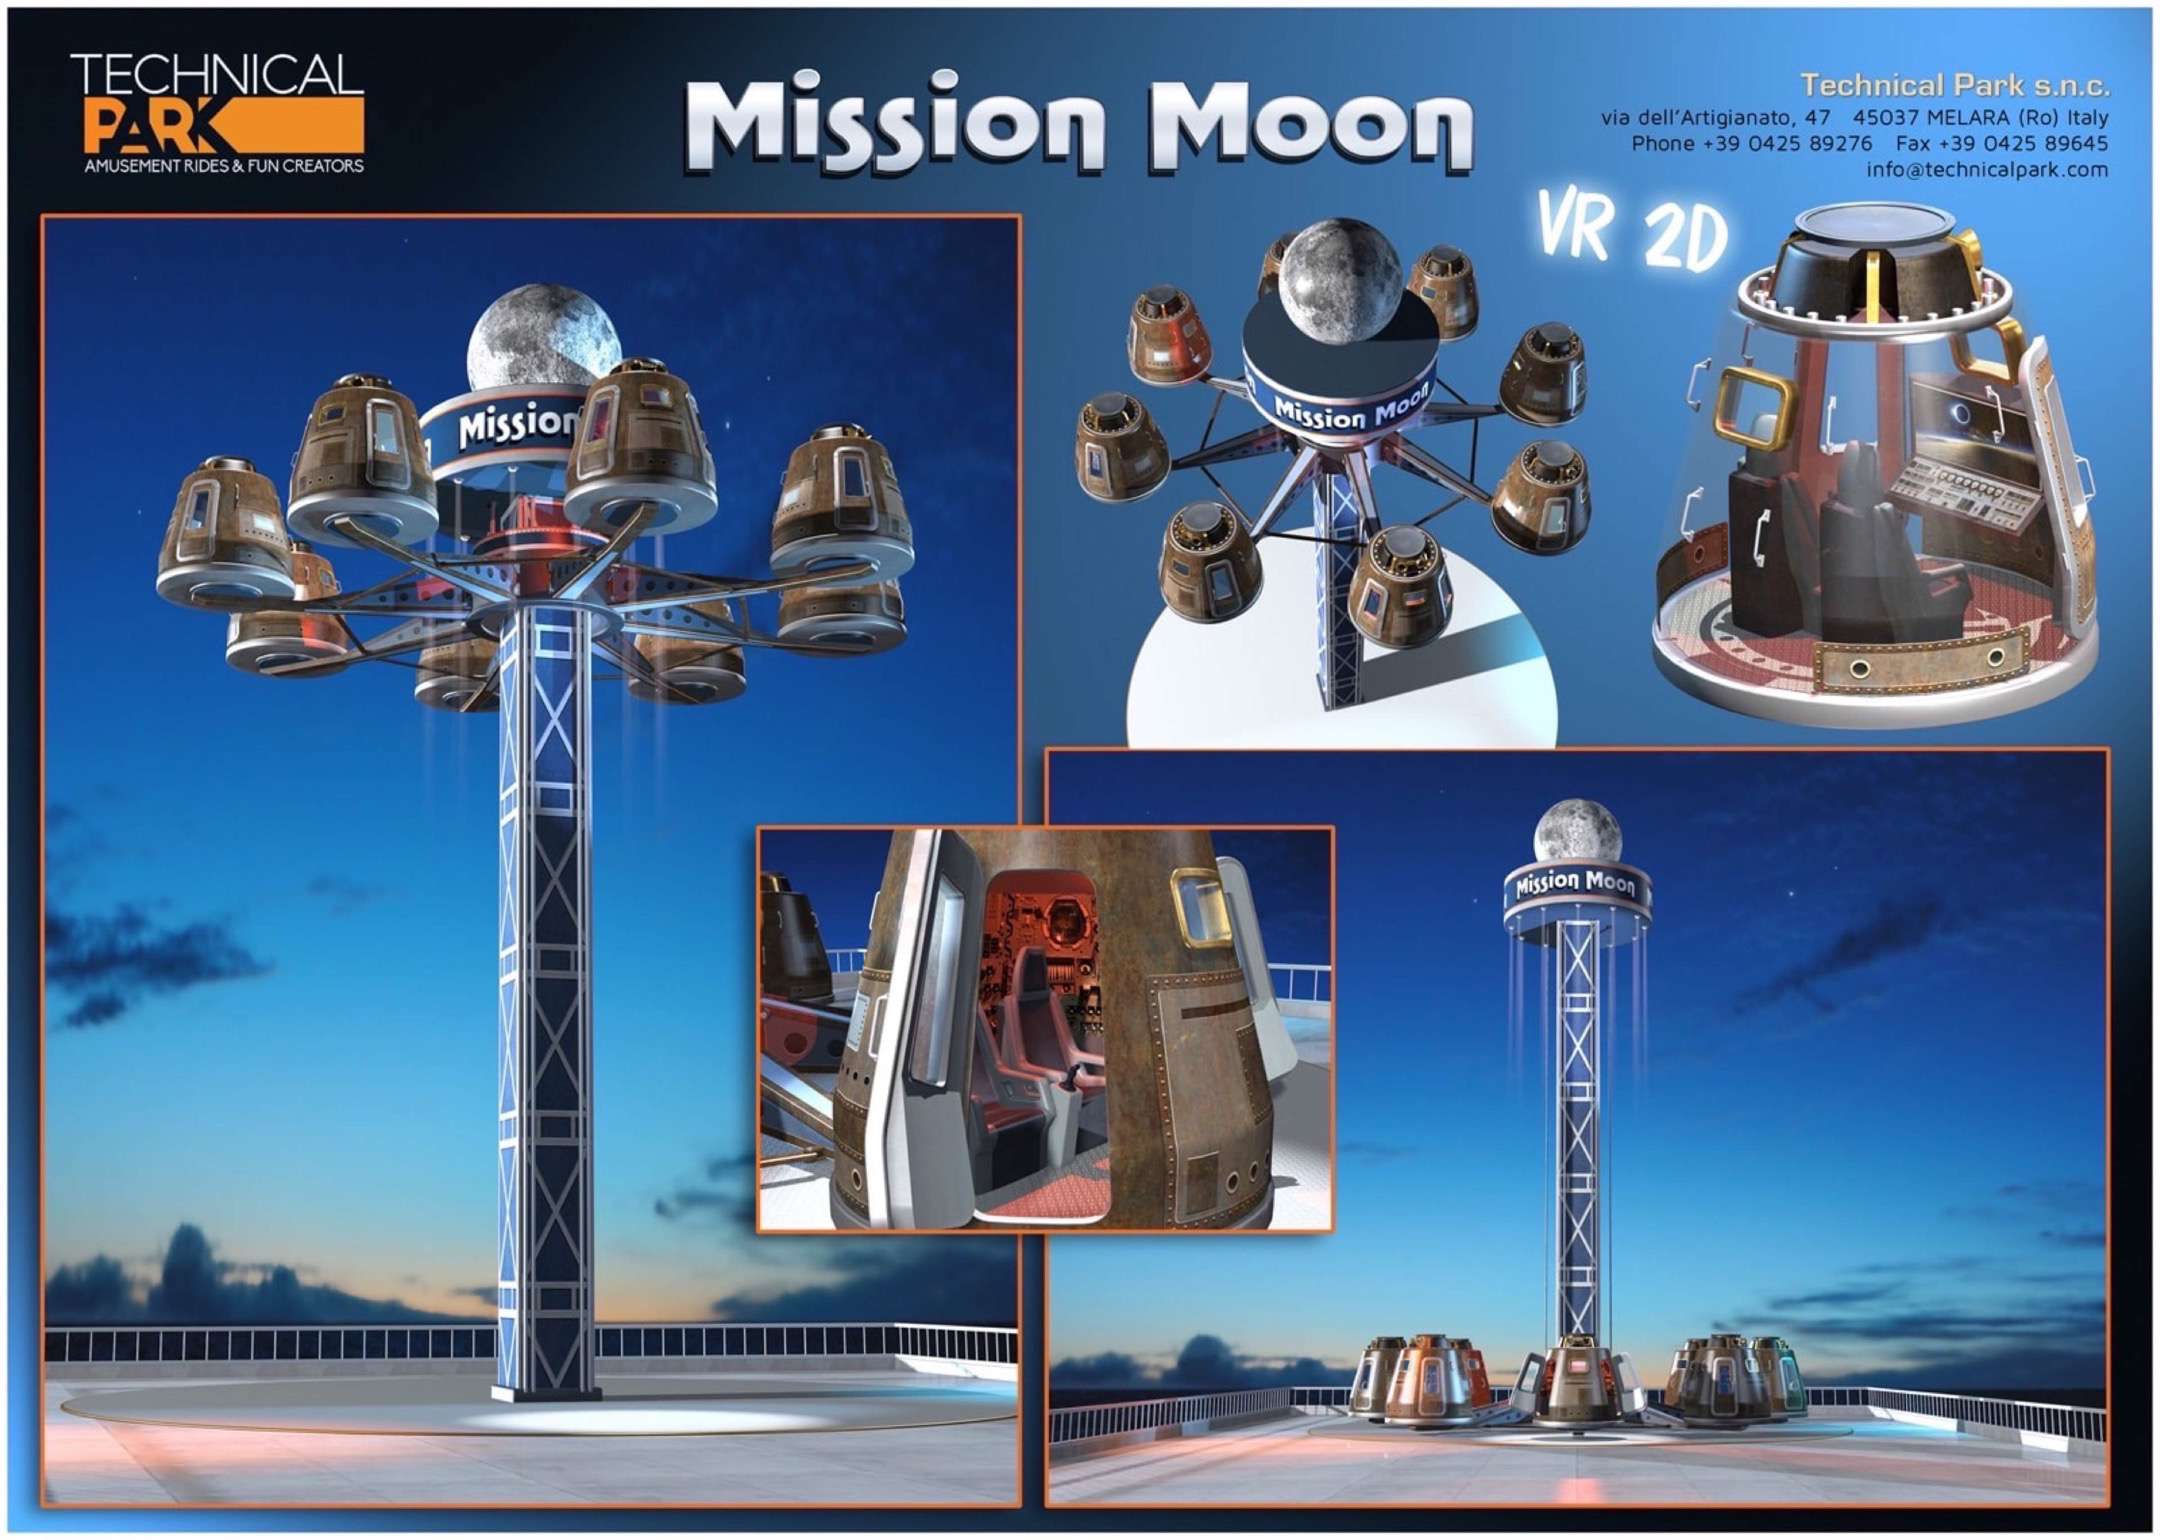 Mission moon - virtual interactivity